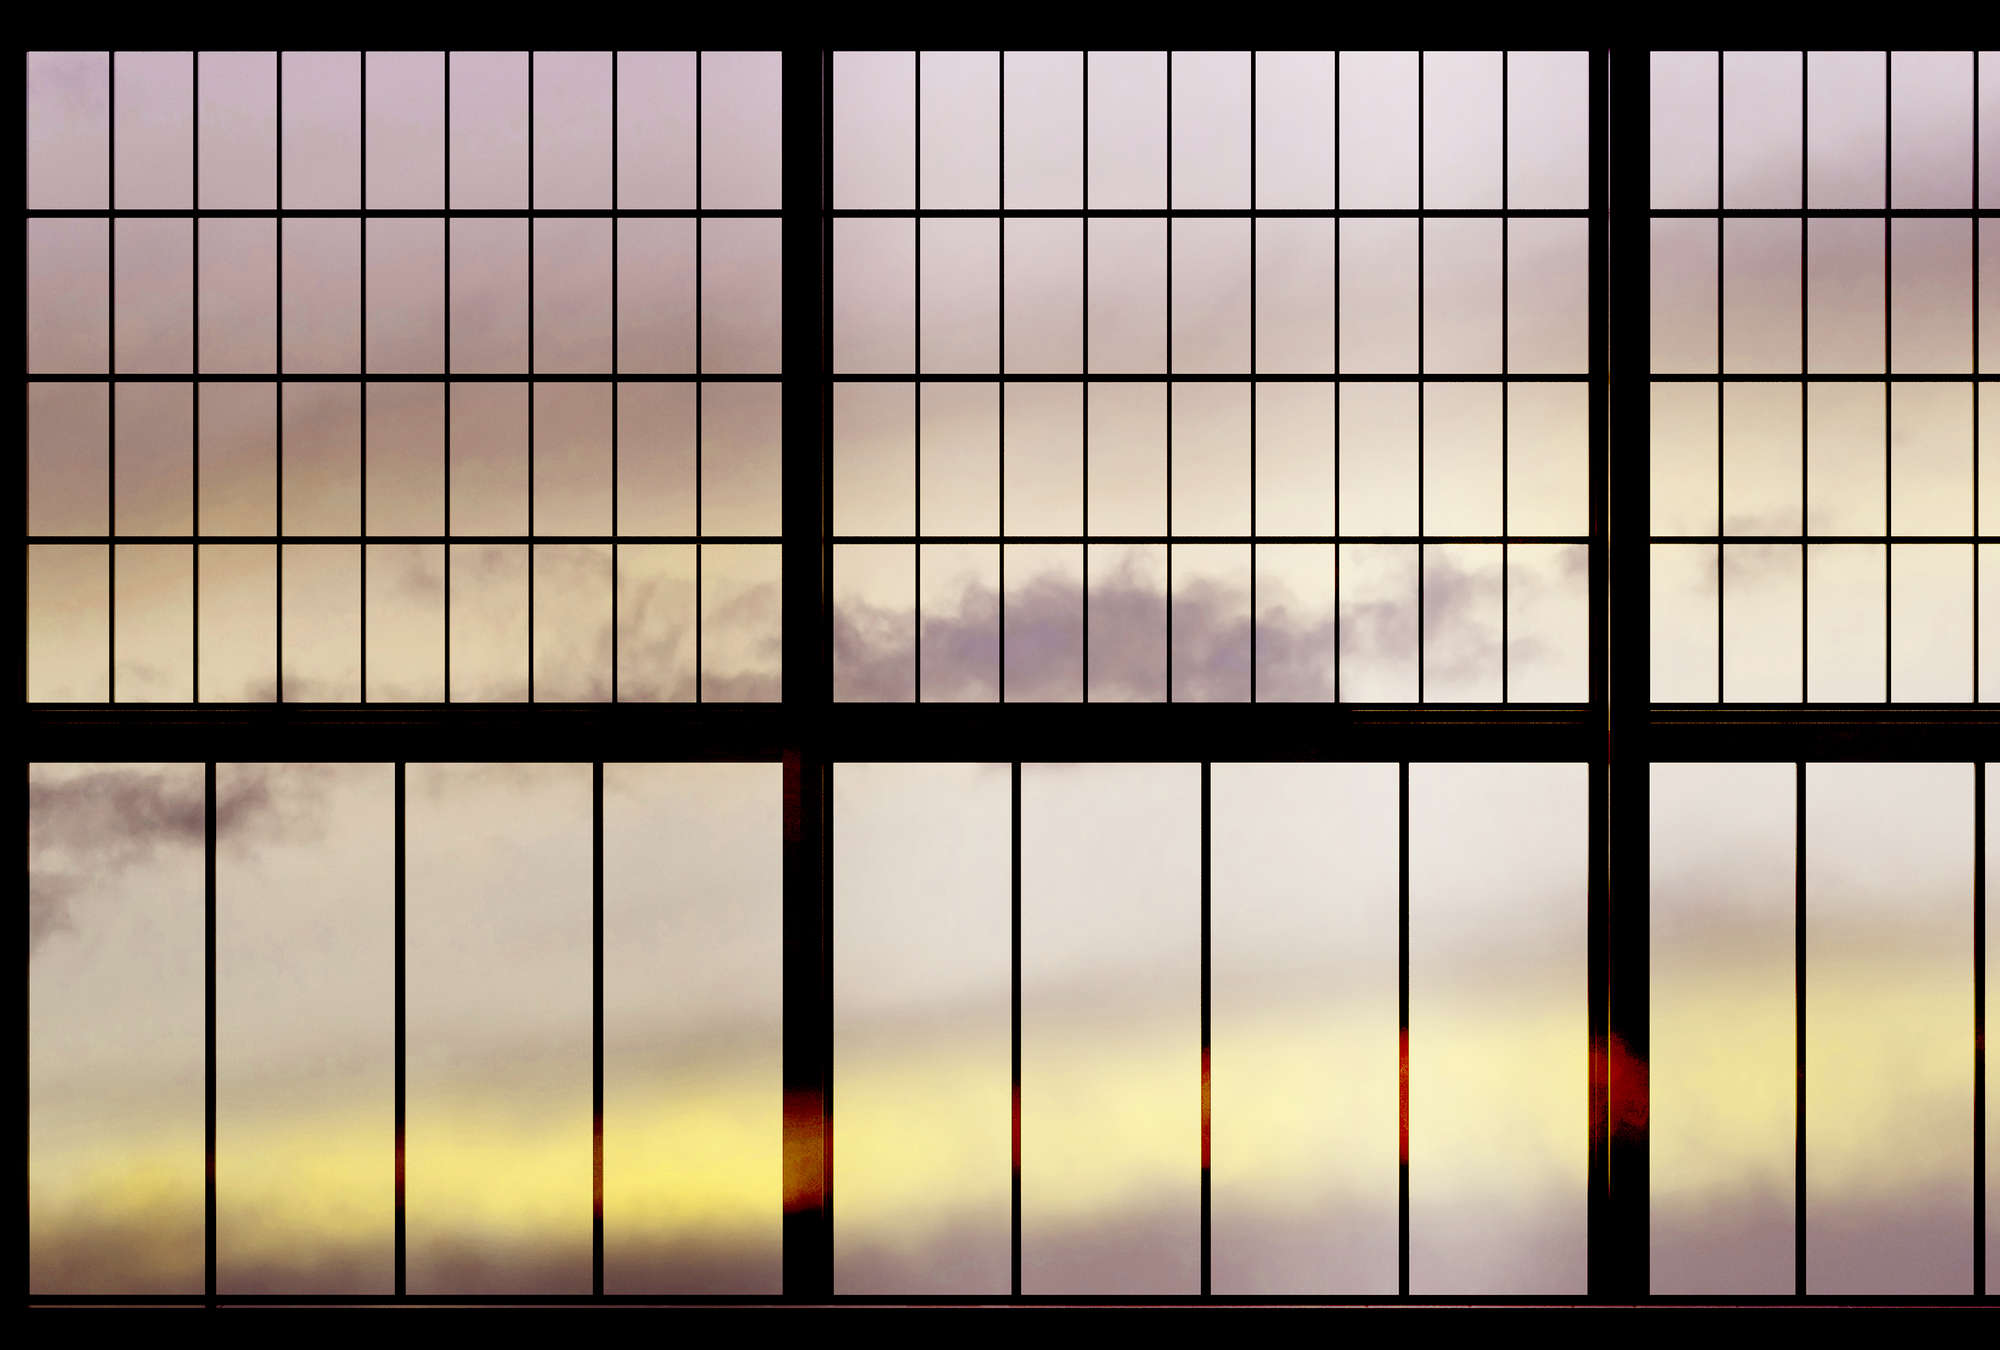             Sky 2 - Fototapete Fenster Ausblick Sonnenaufgang – Gelb, Schwarz | Perlmutt Glattvlies
        